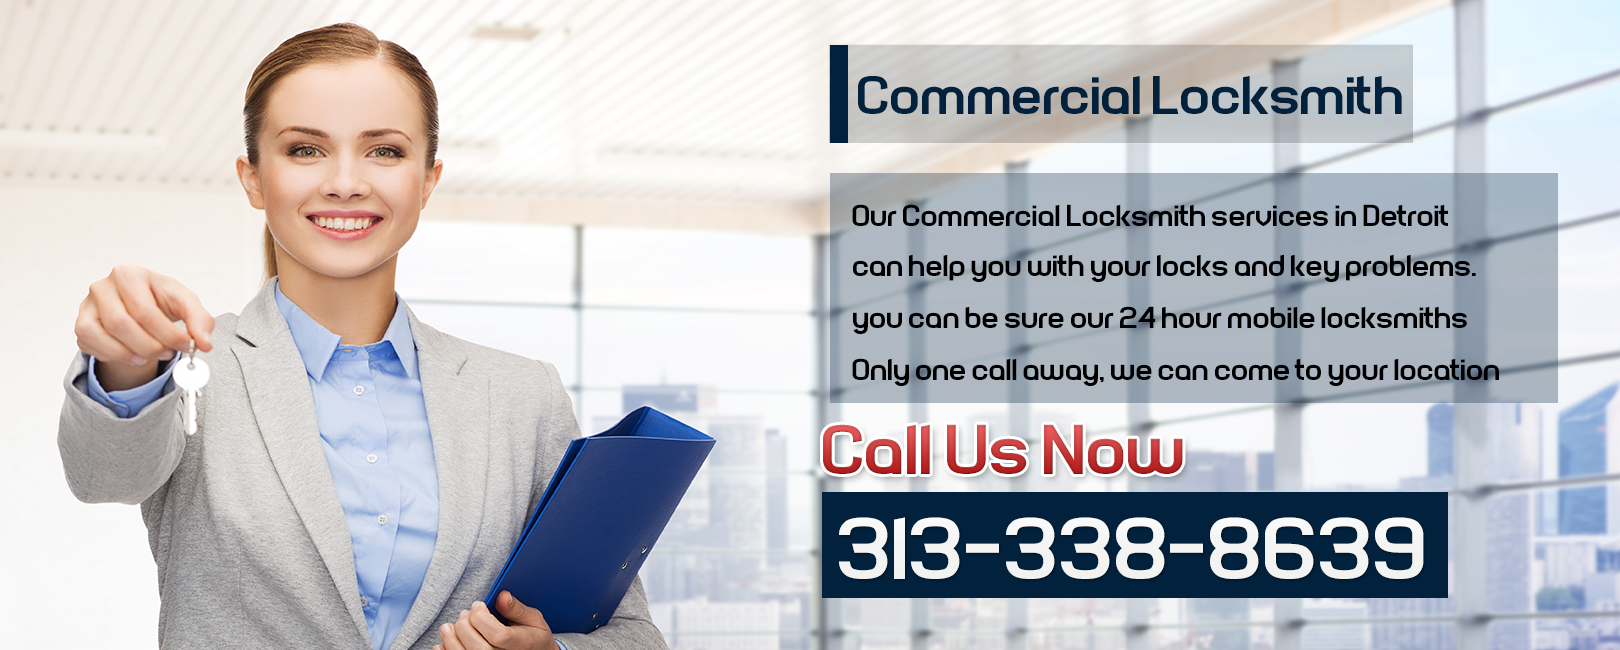 Commercial Locksmith Detroit MI